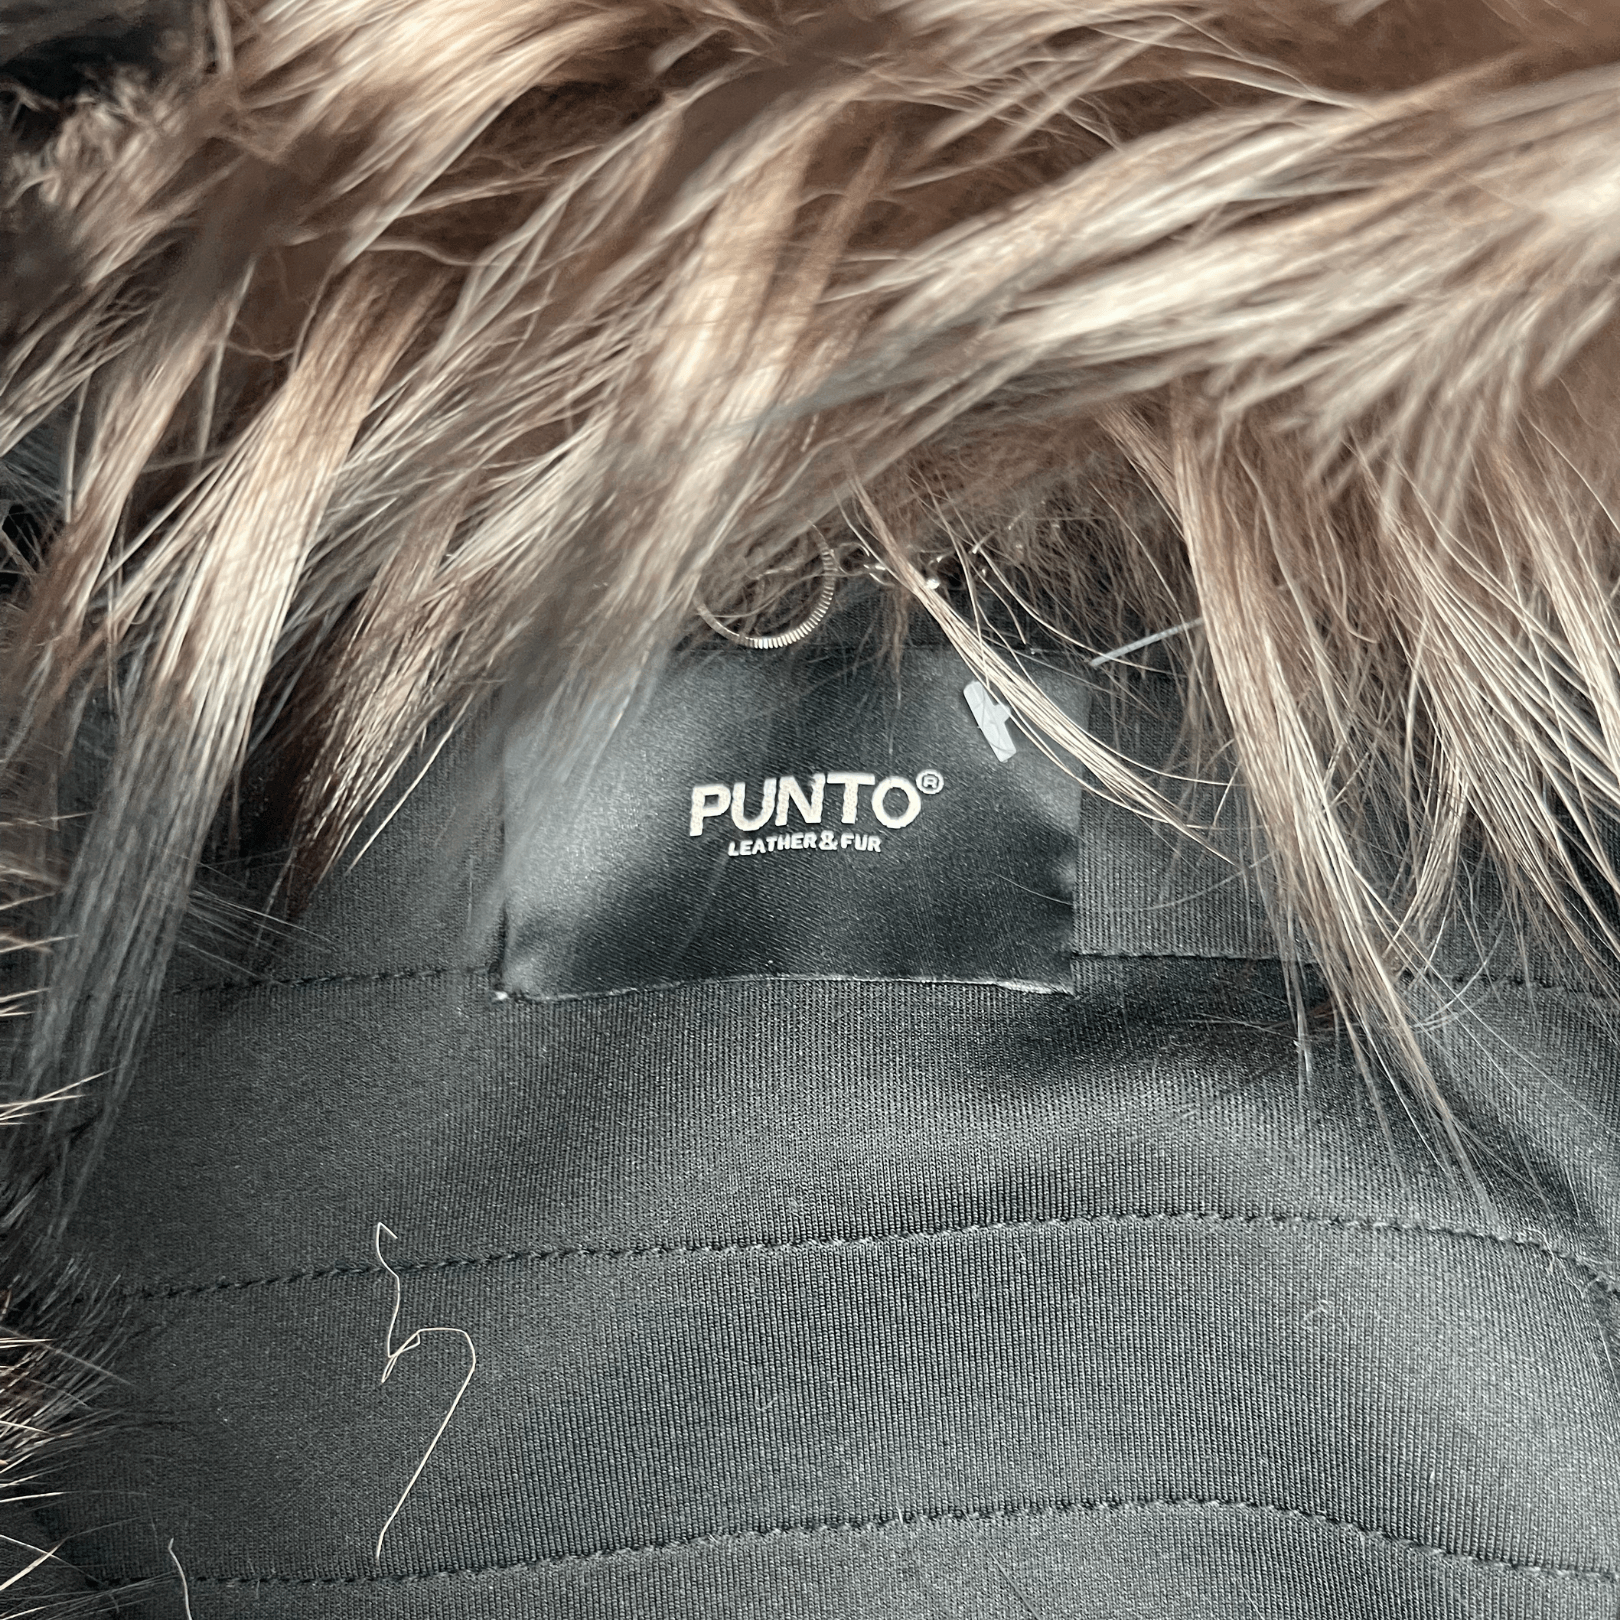 Punto Fox Fur Jacket - Women's 4 - Fashionably Yours